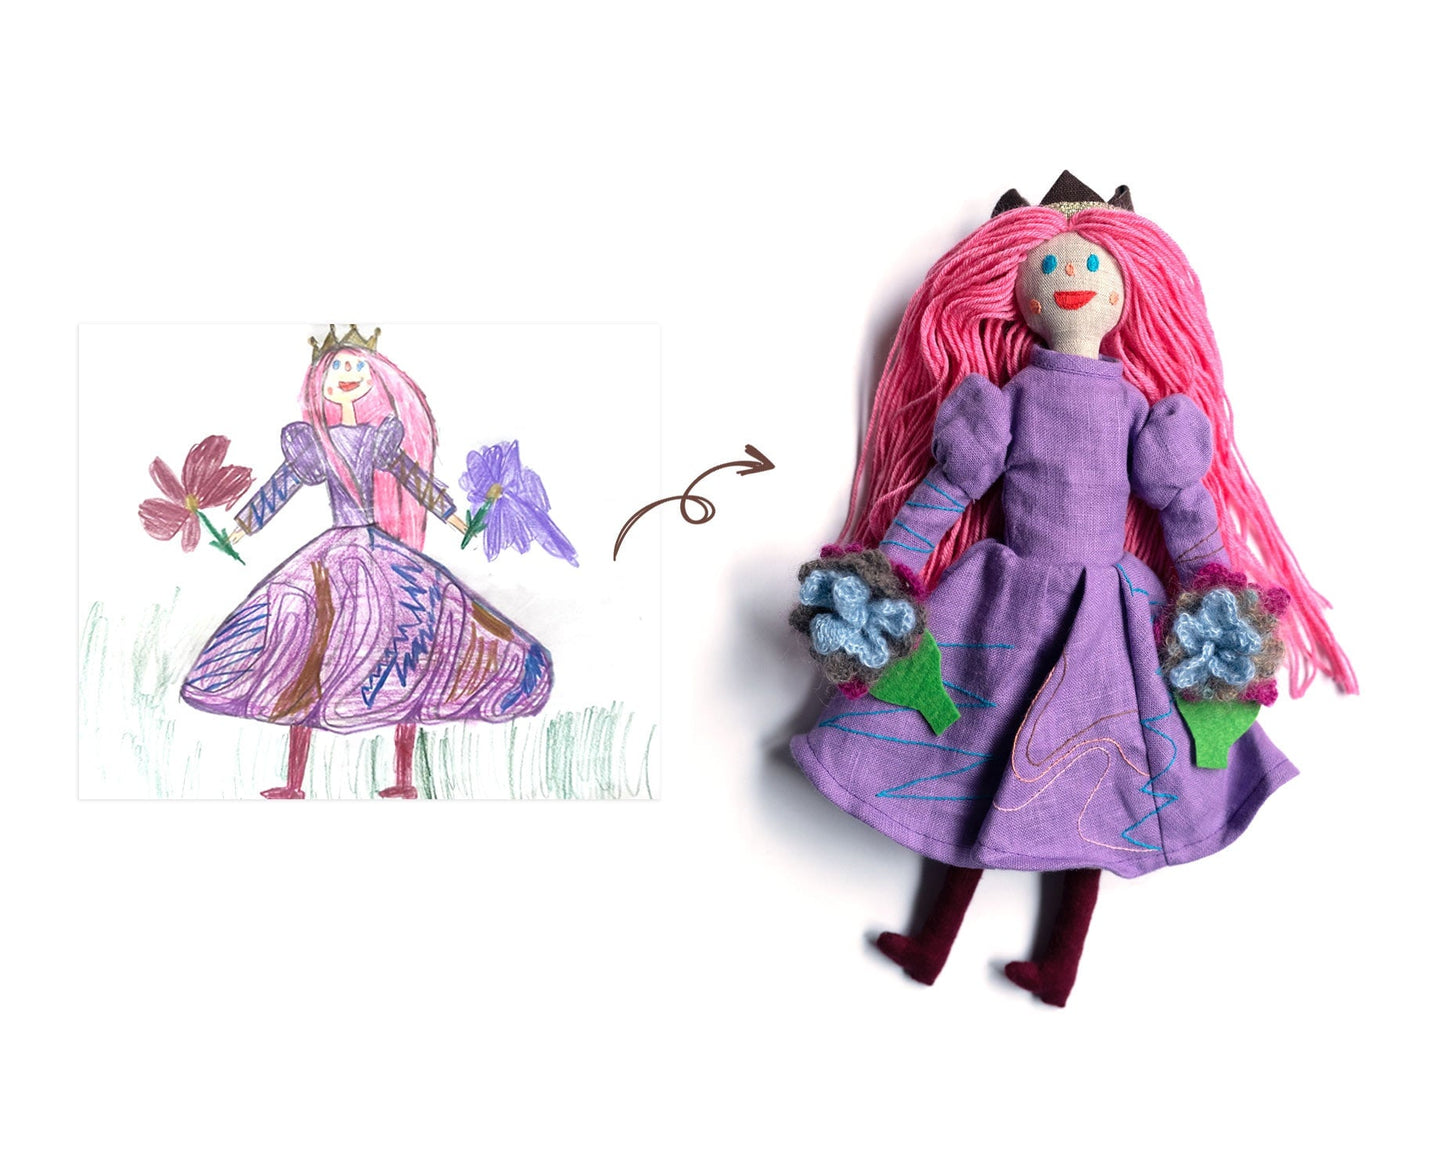 Custom Stuffed Dolls - We make unique dolls out of drawings